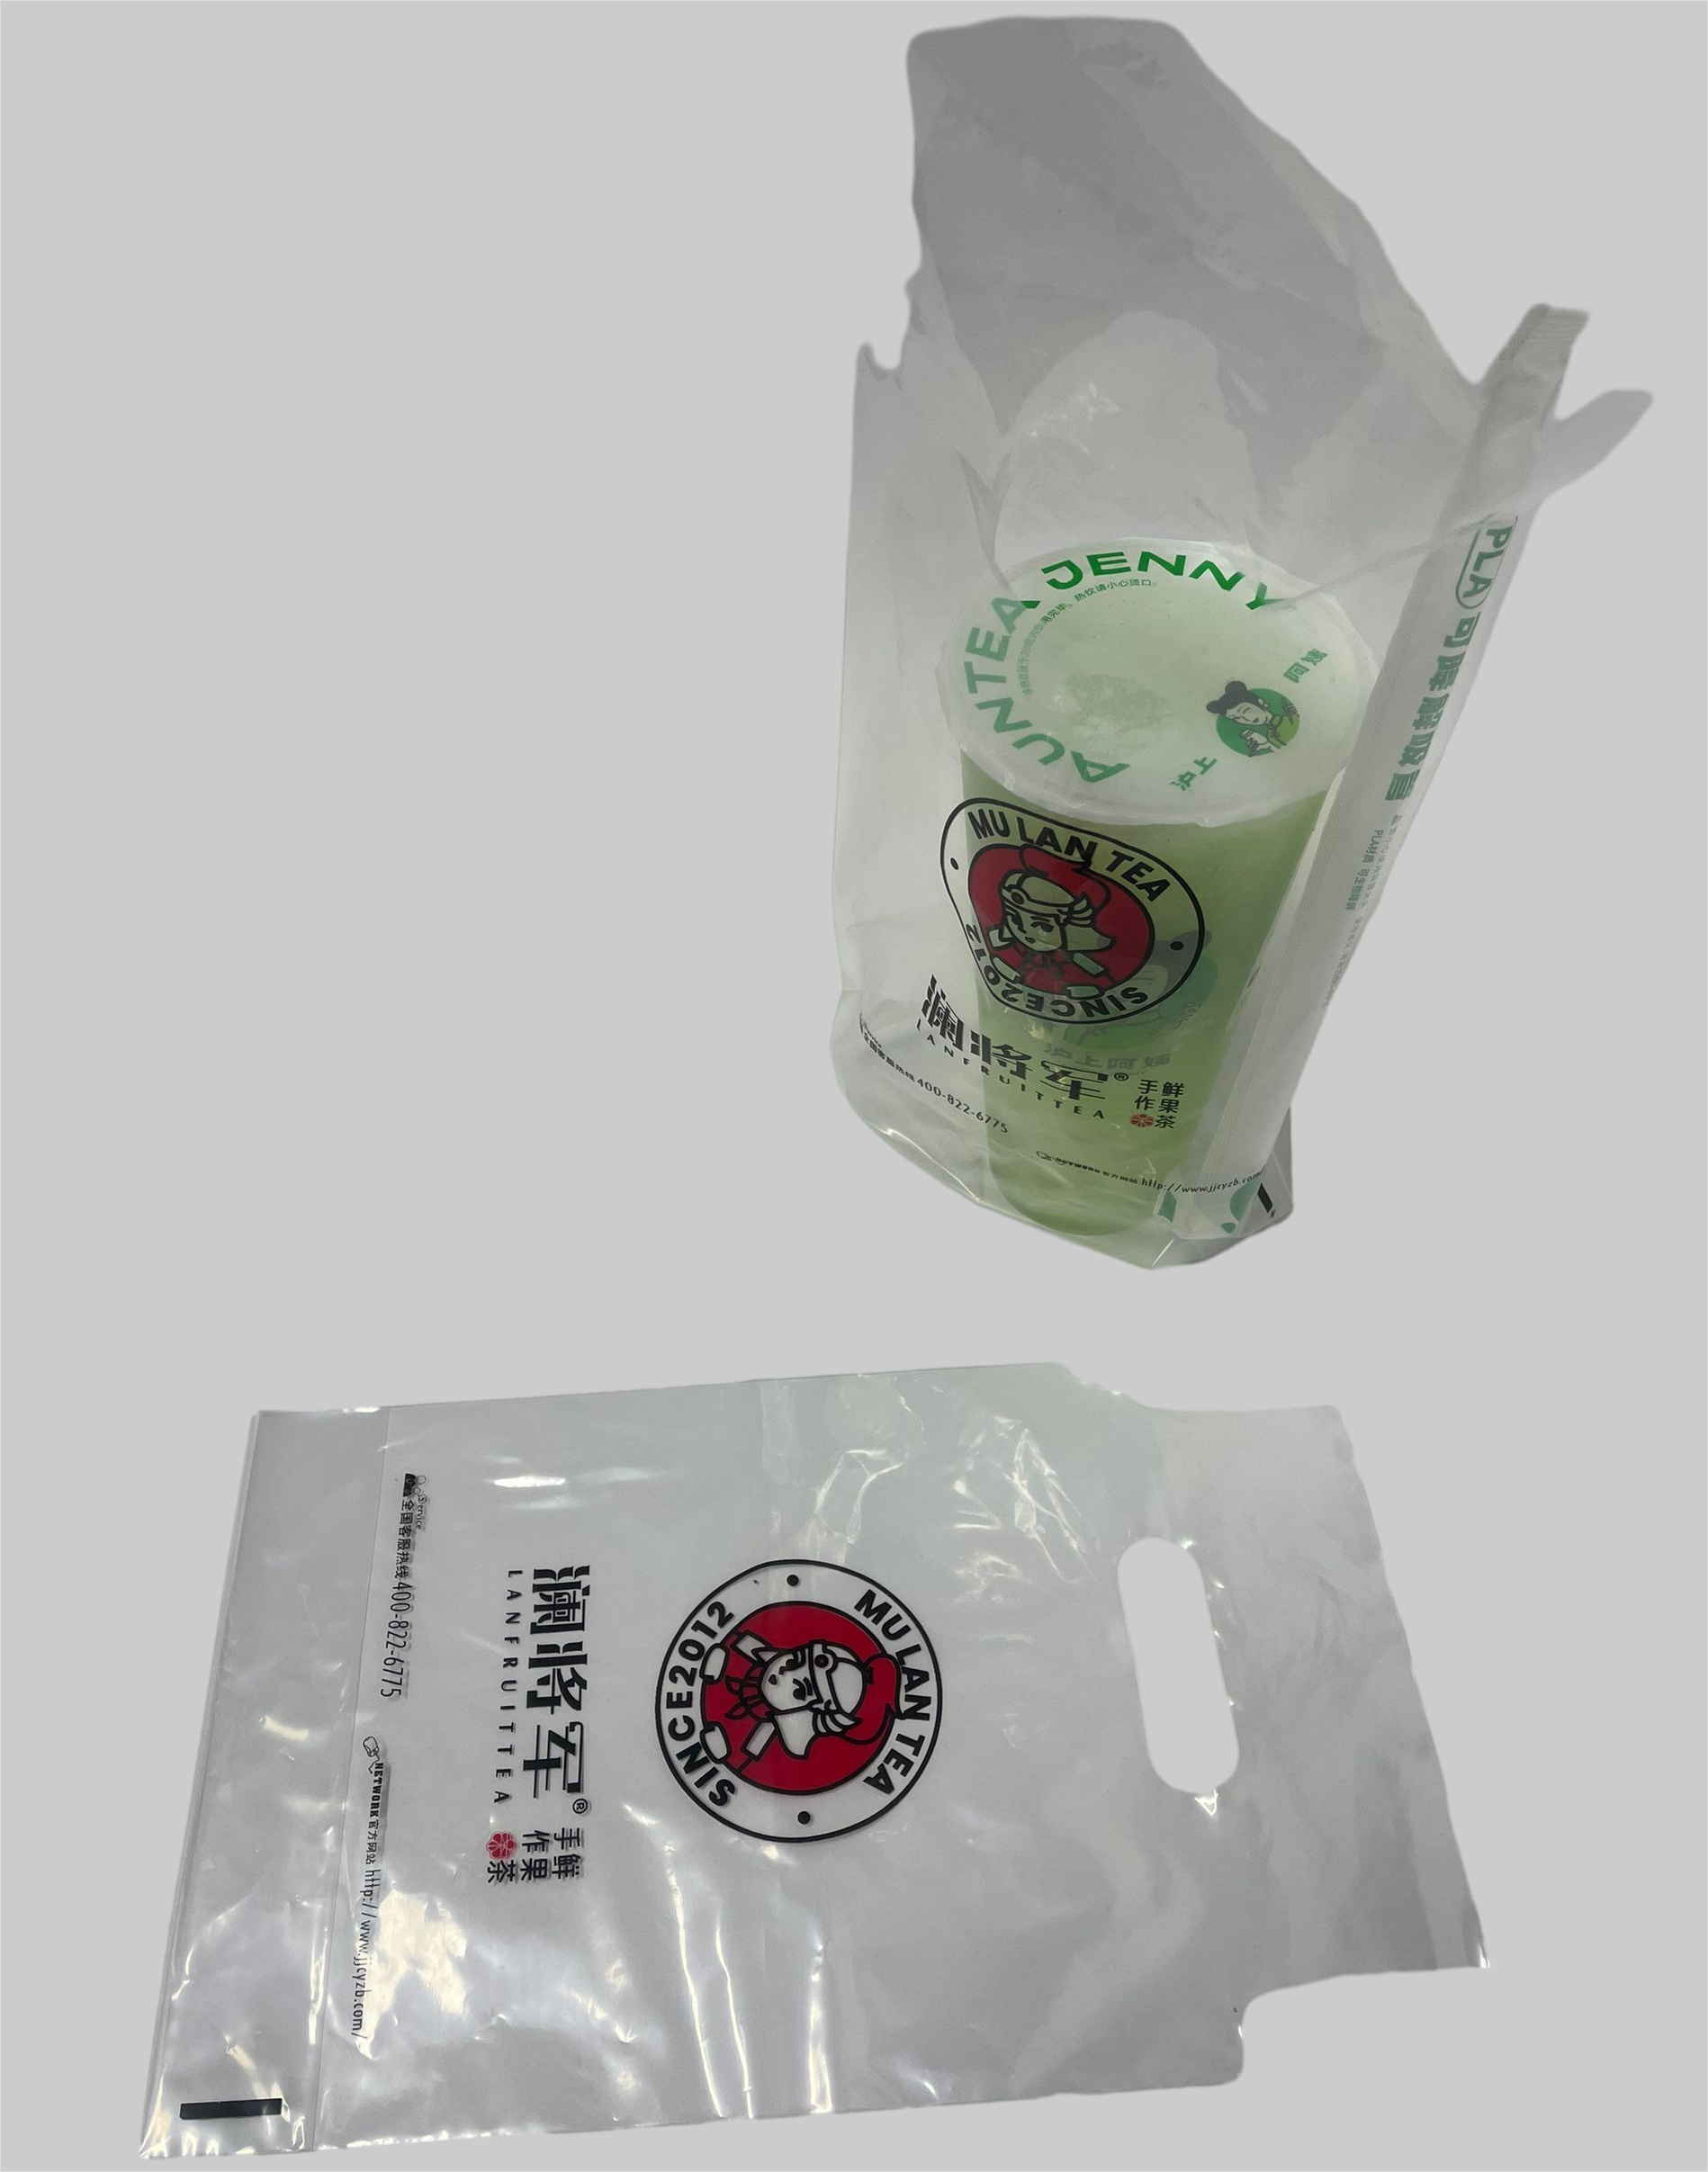  Coffee Carrier Bag Disposable Plastic Bubble Tea Beverage Takeaway Bag